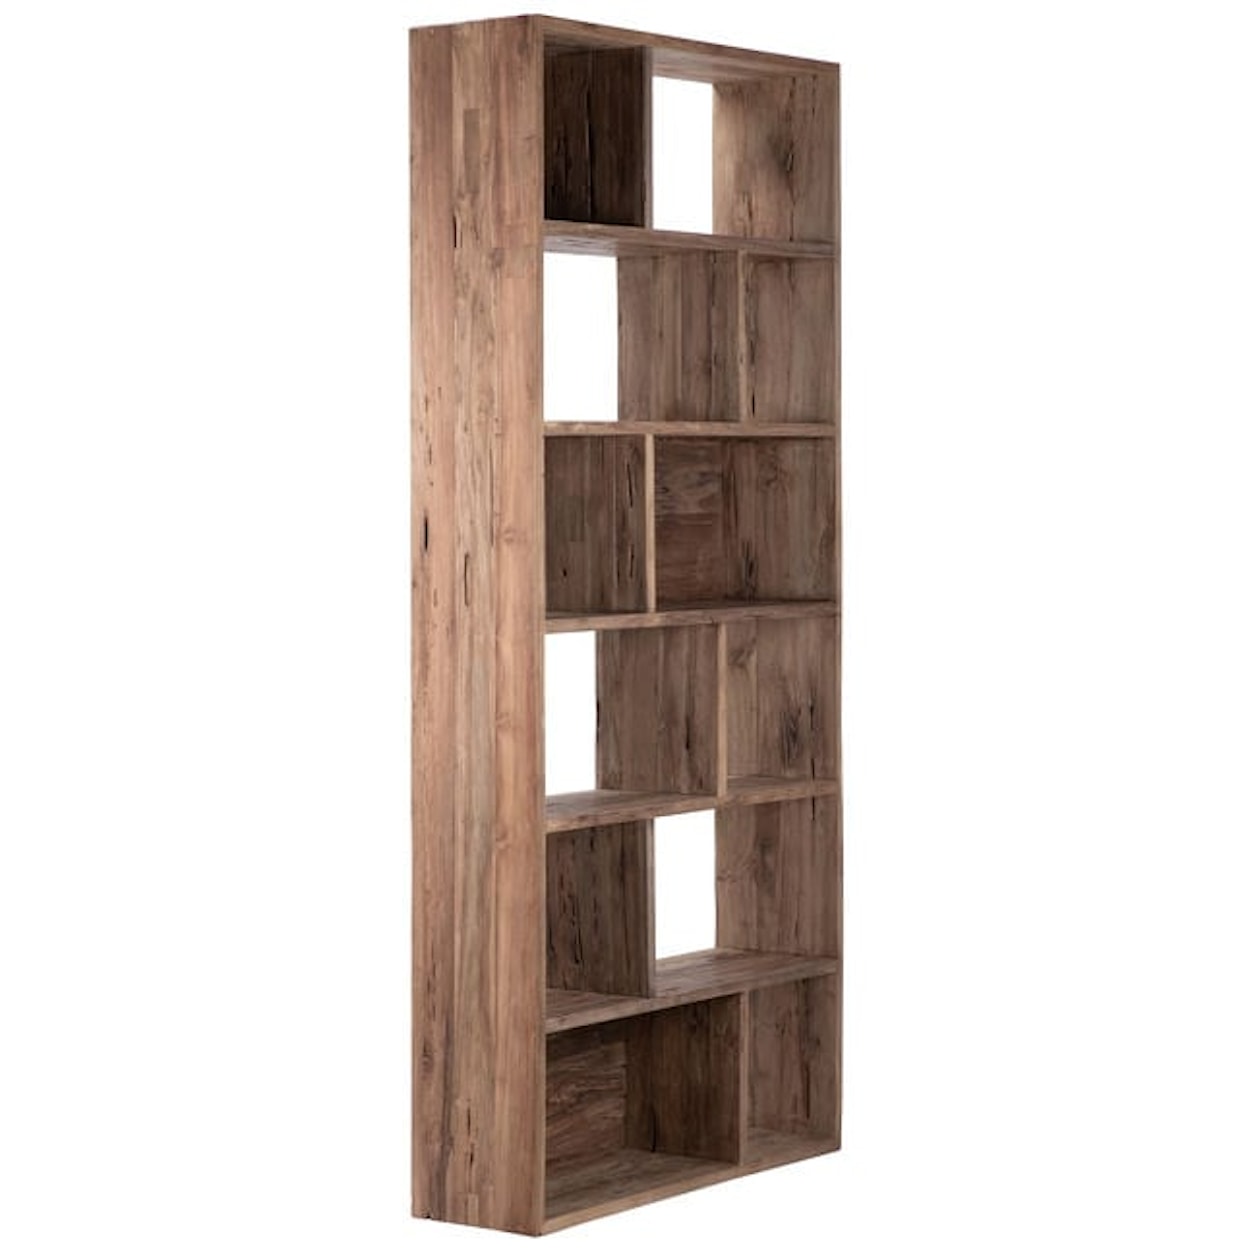 Dovetail Furniture Mariz Mariz Tall Bookcase by Dovetail